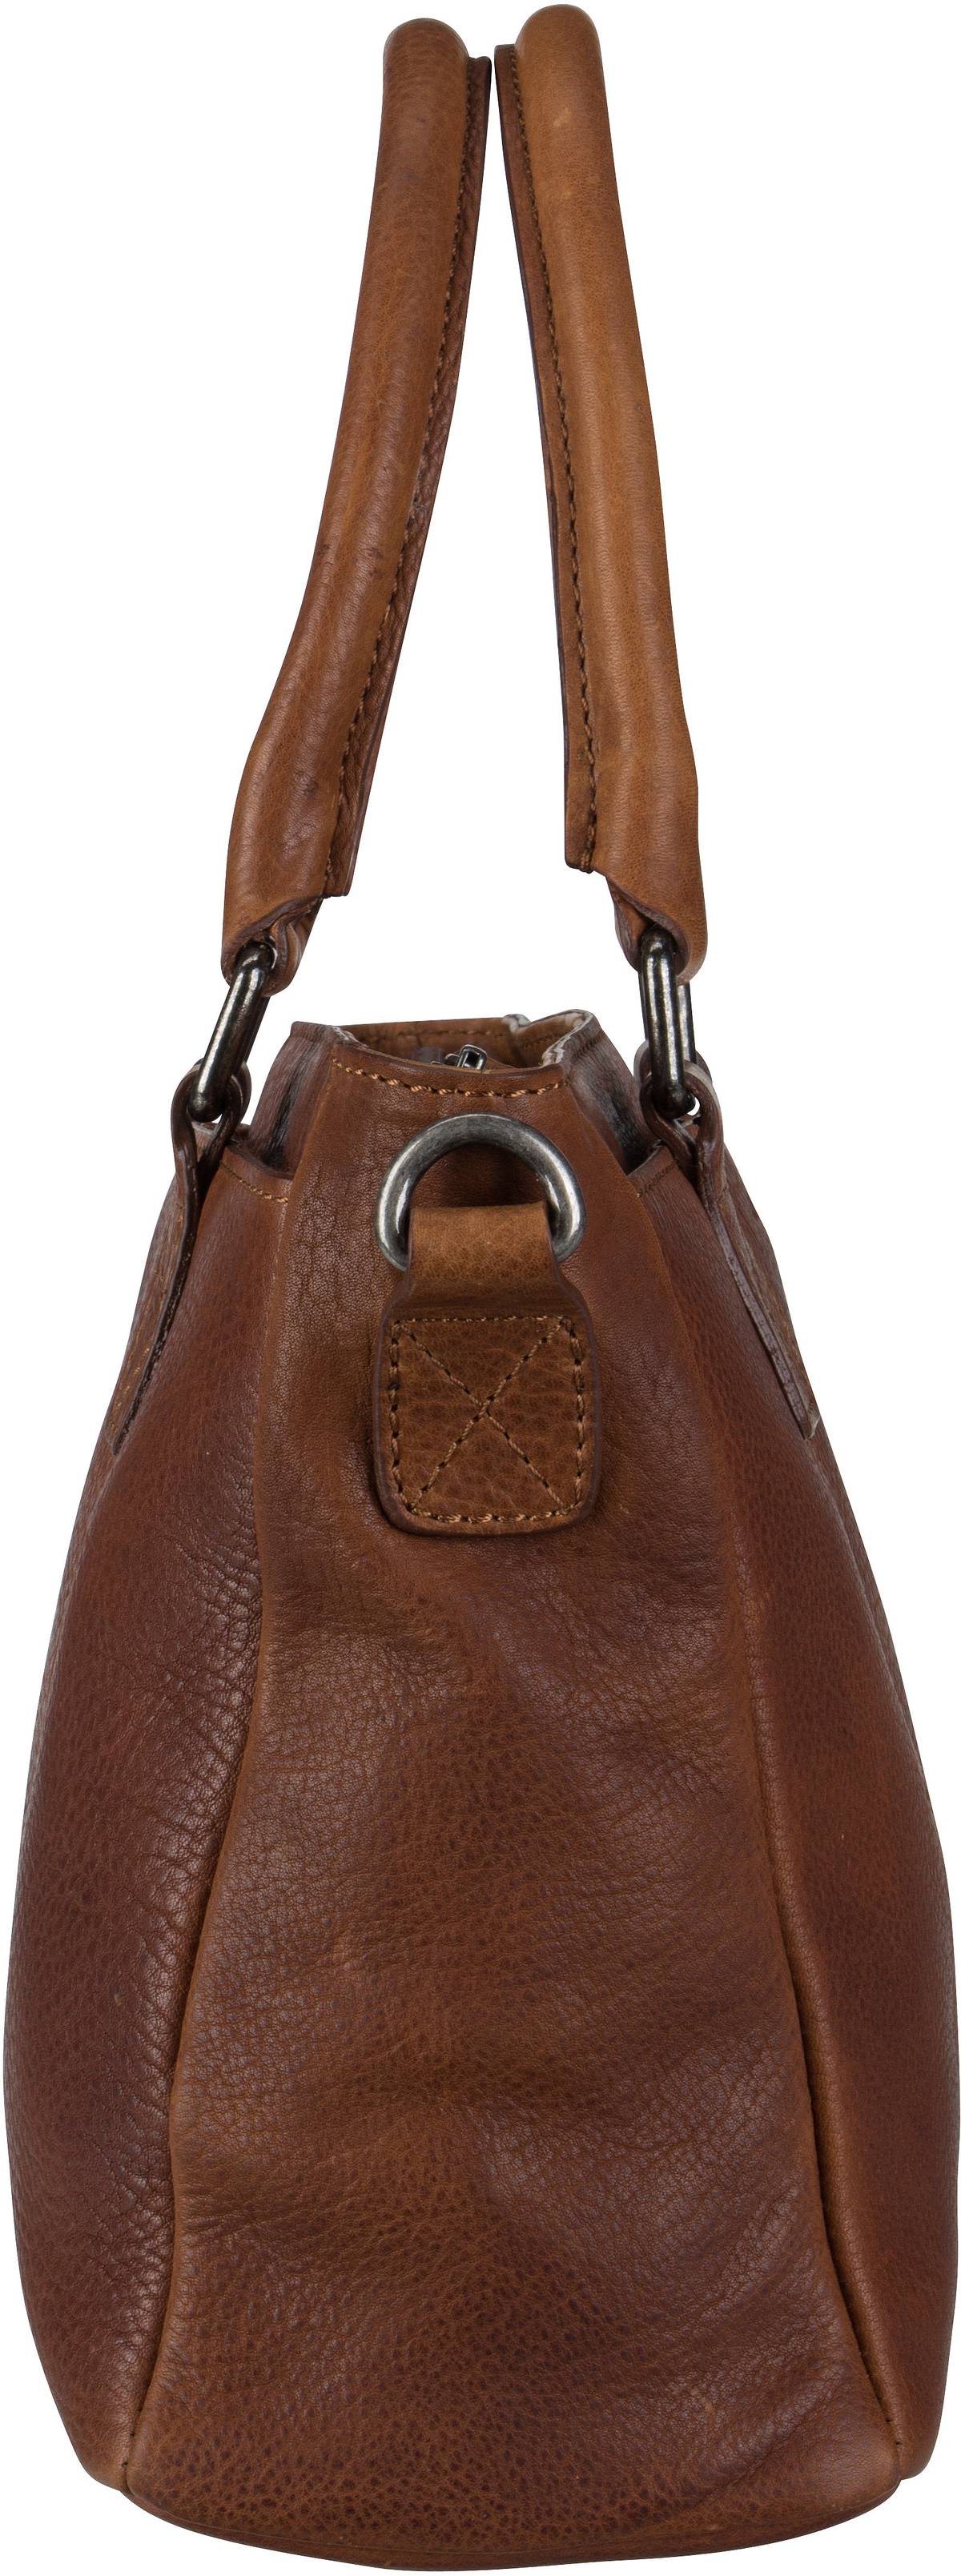 Burkely Antique Avery Handbag S 6956 - Cognac